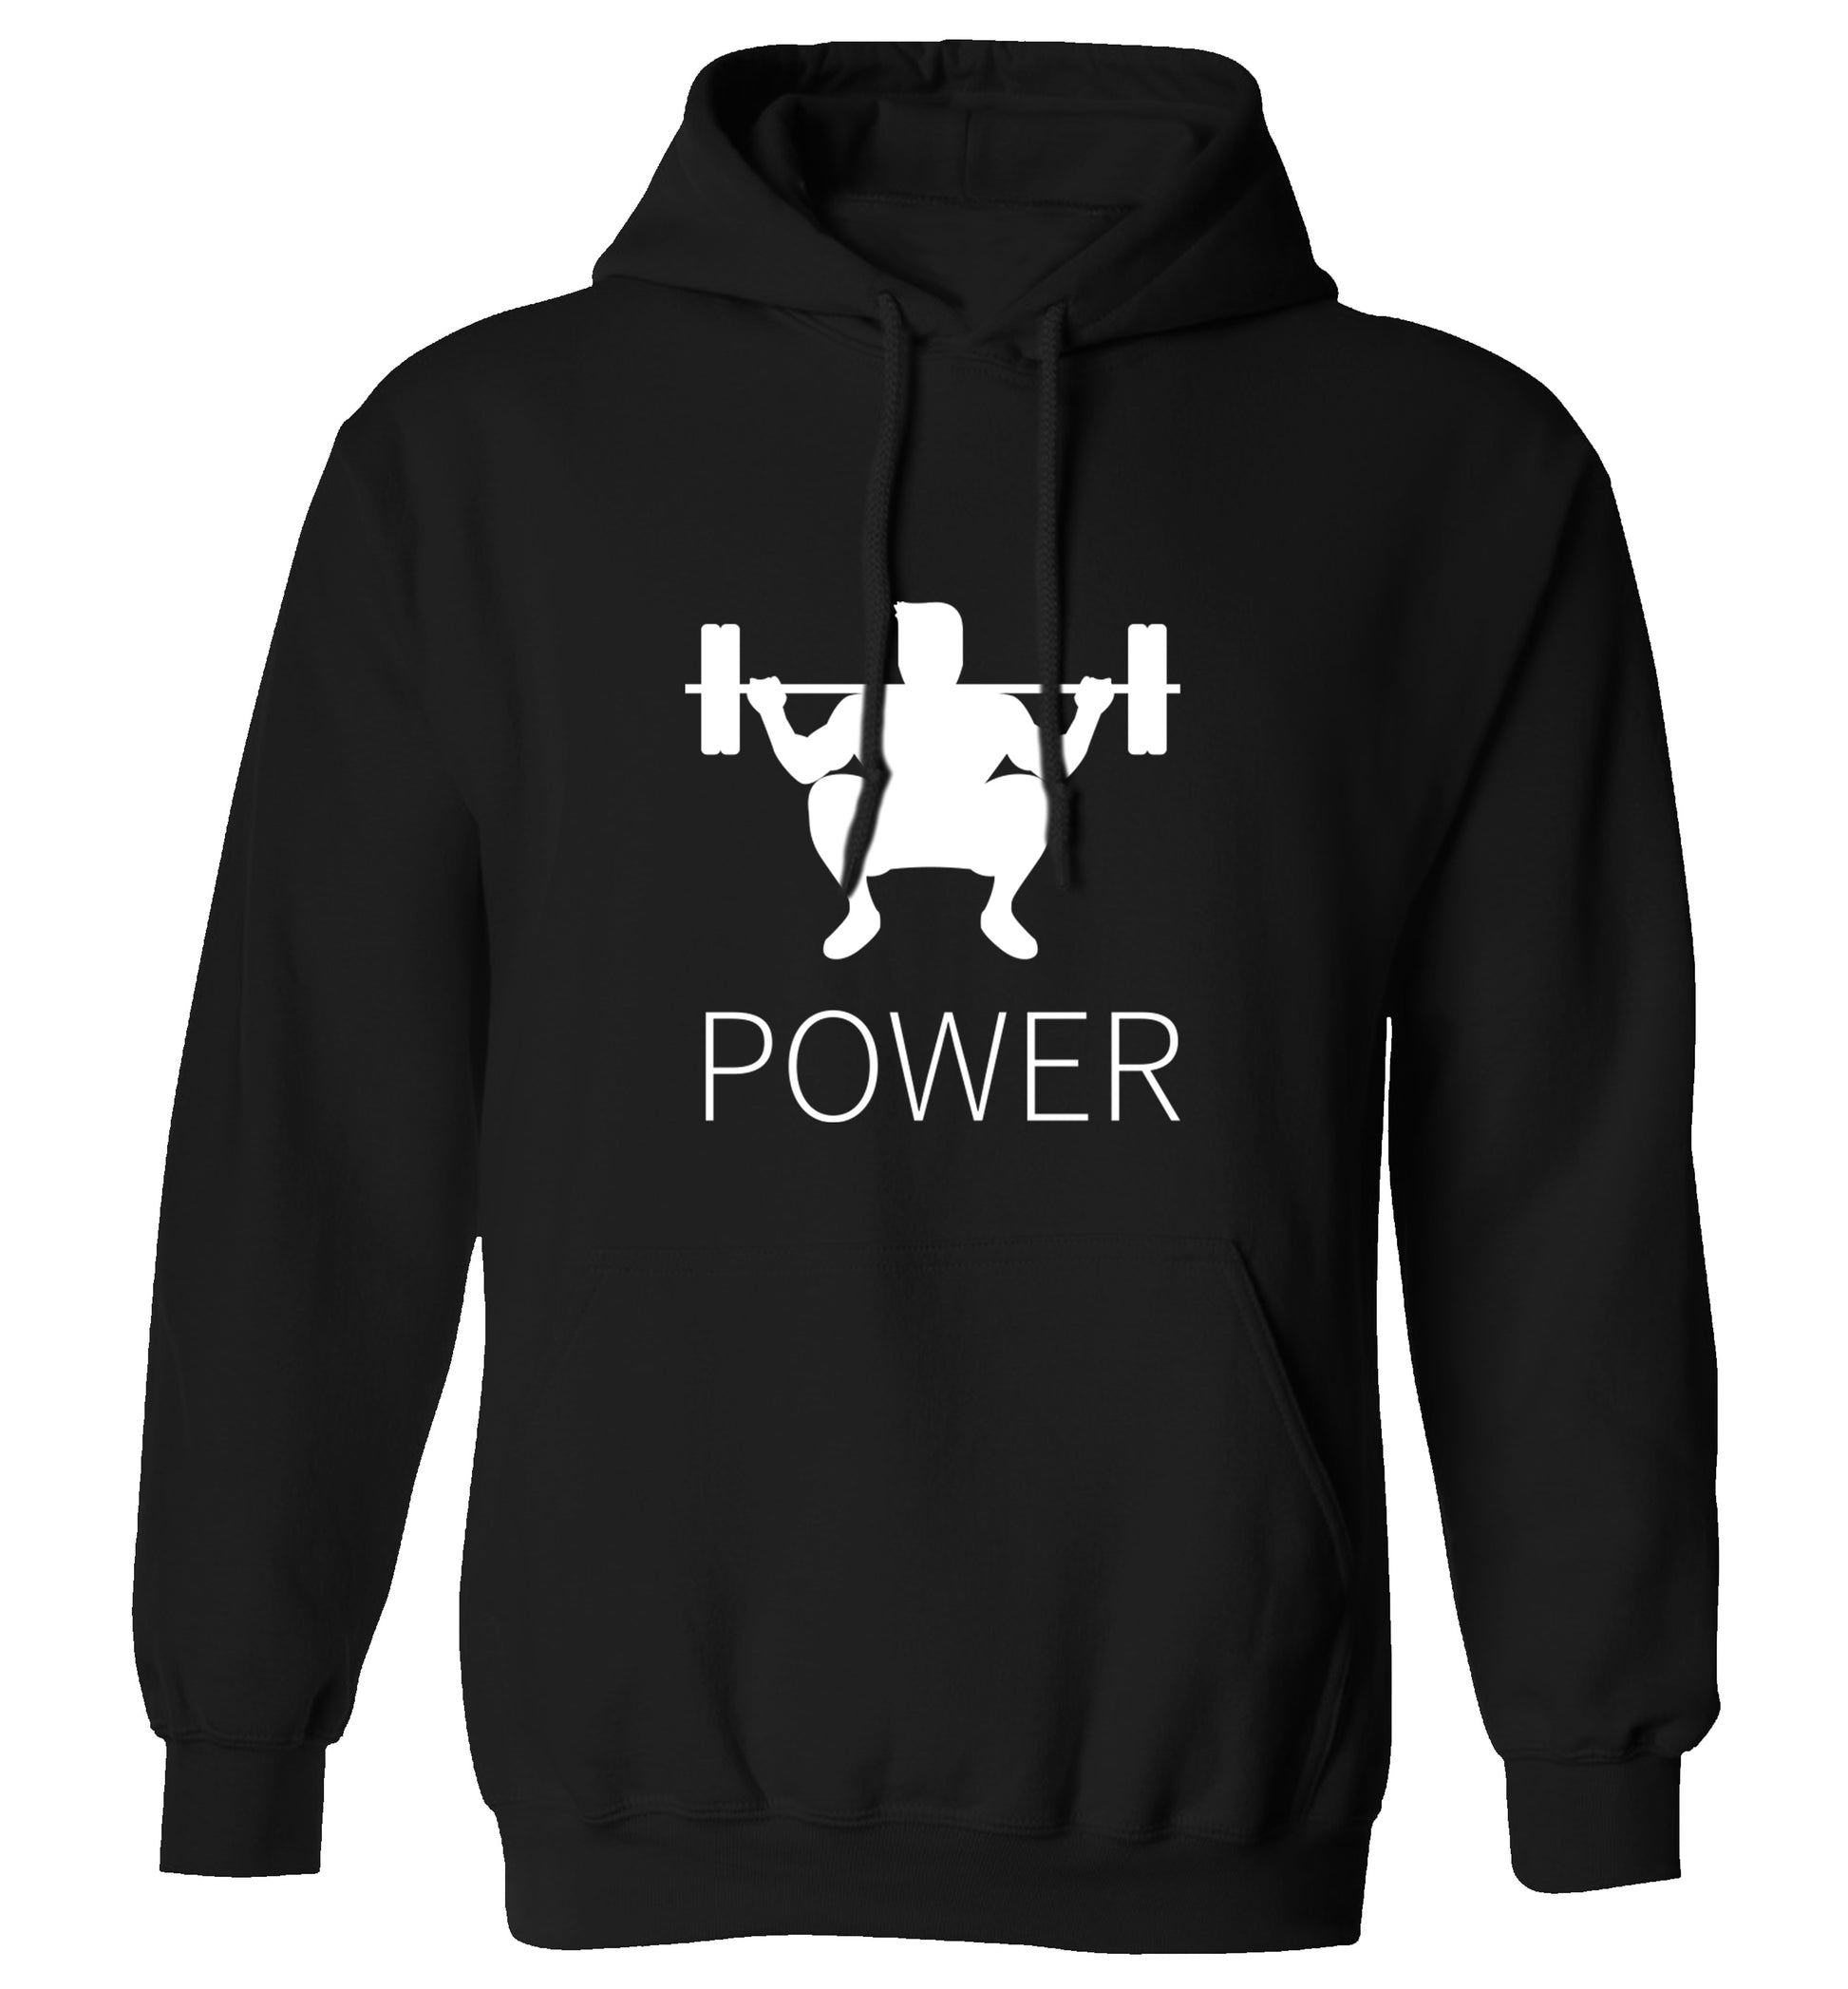 Lift power adults unisex black hoodie 2XL